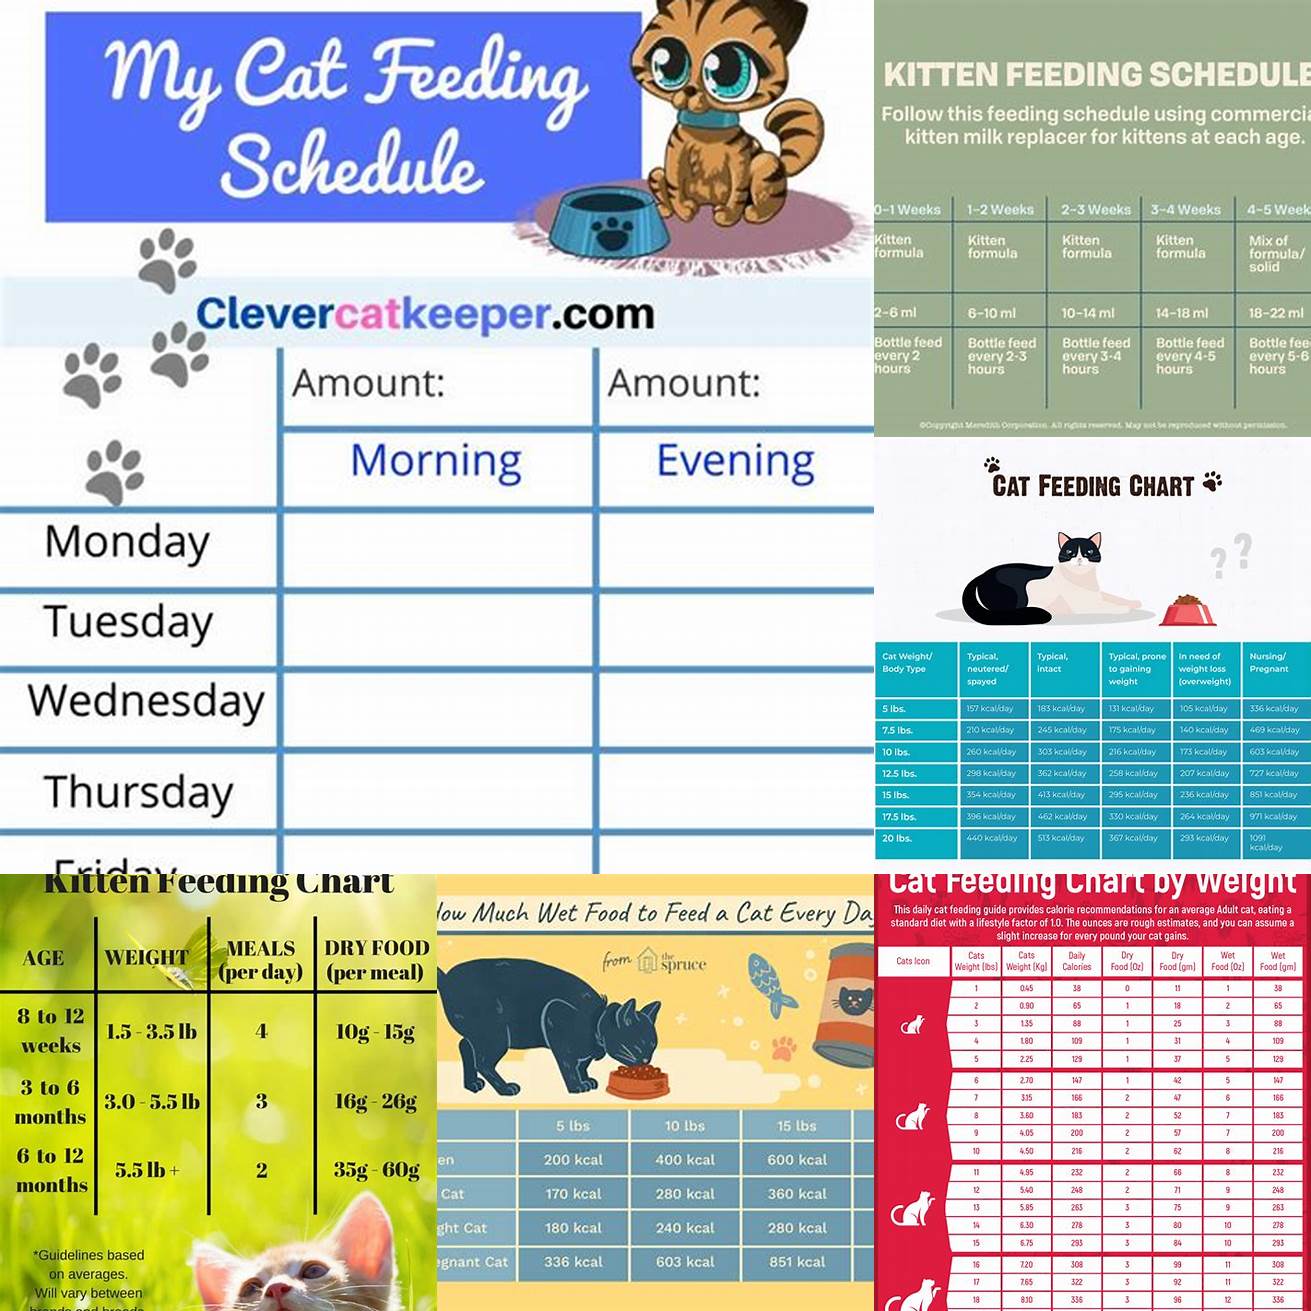 Cat feeding schedule